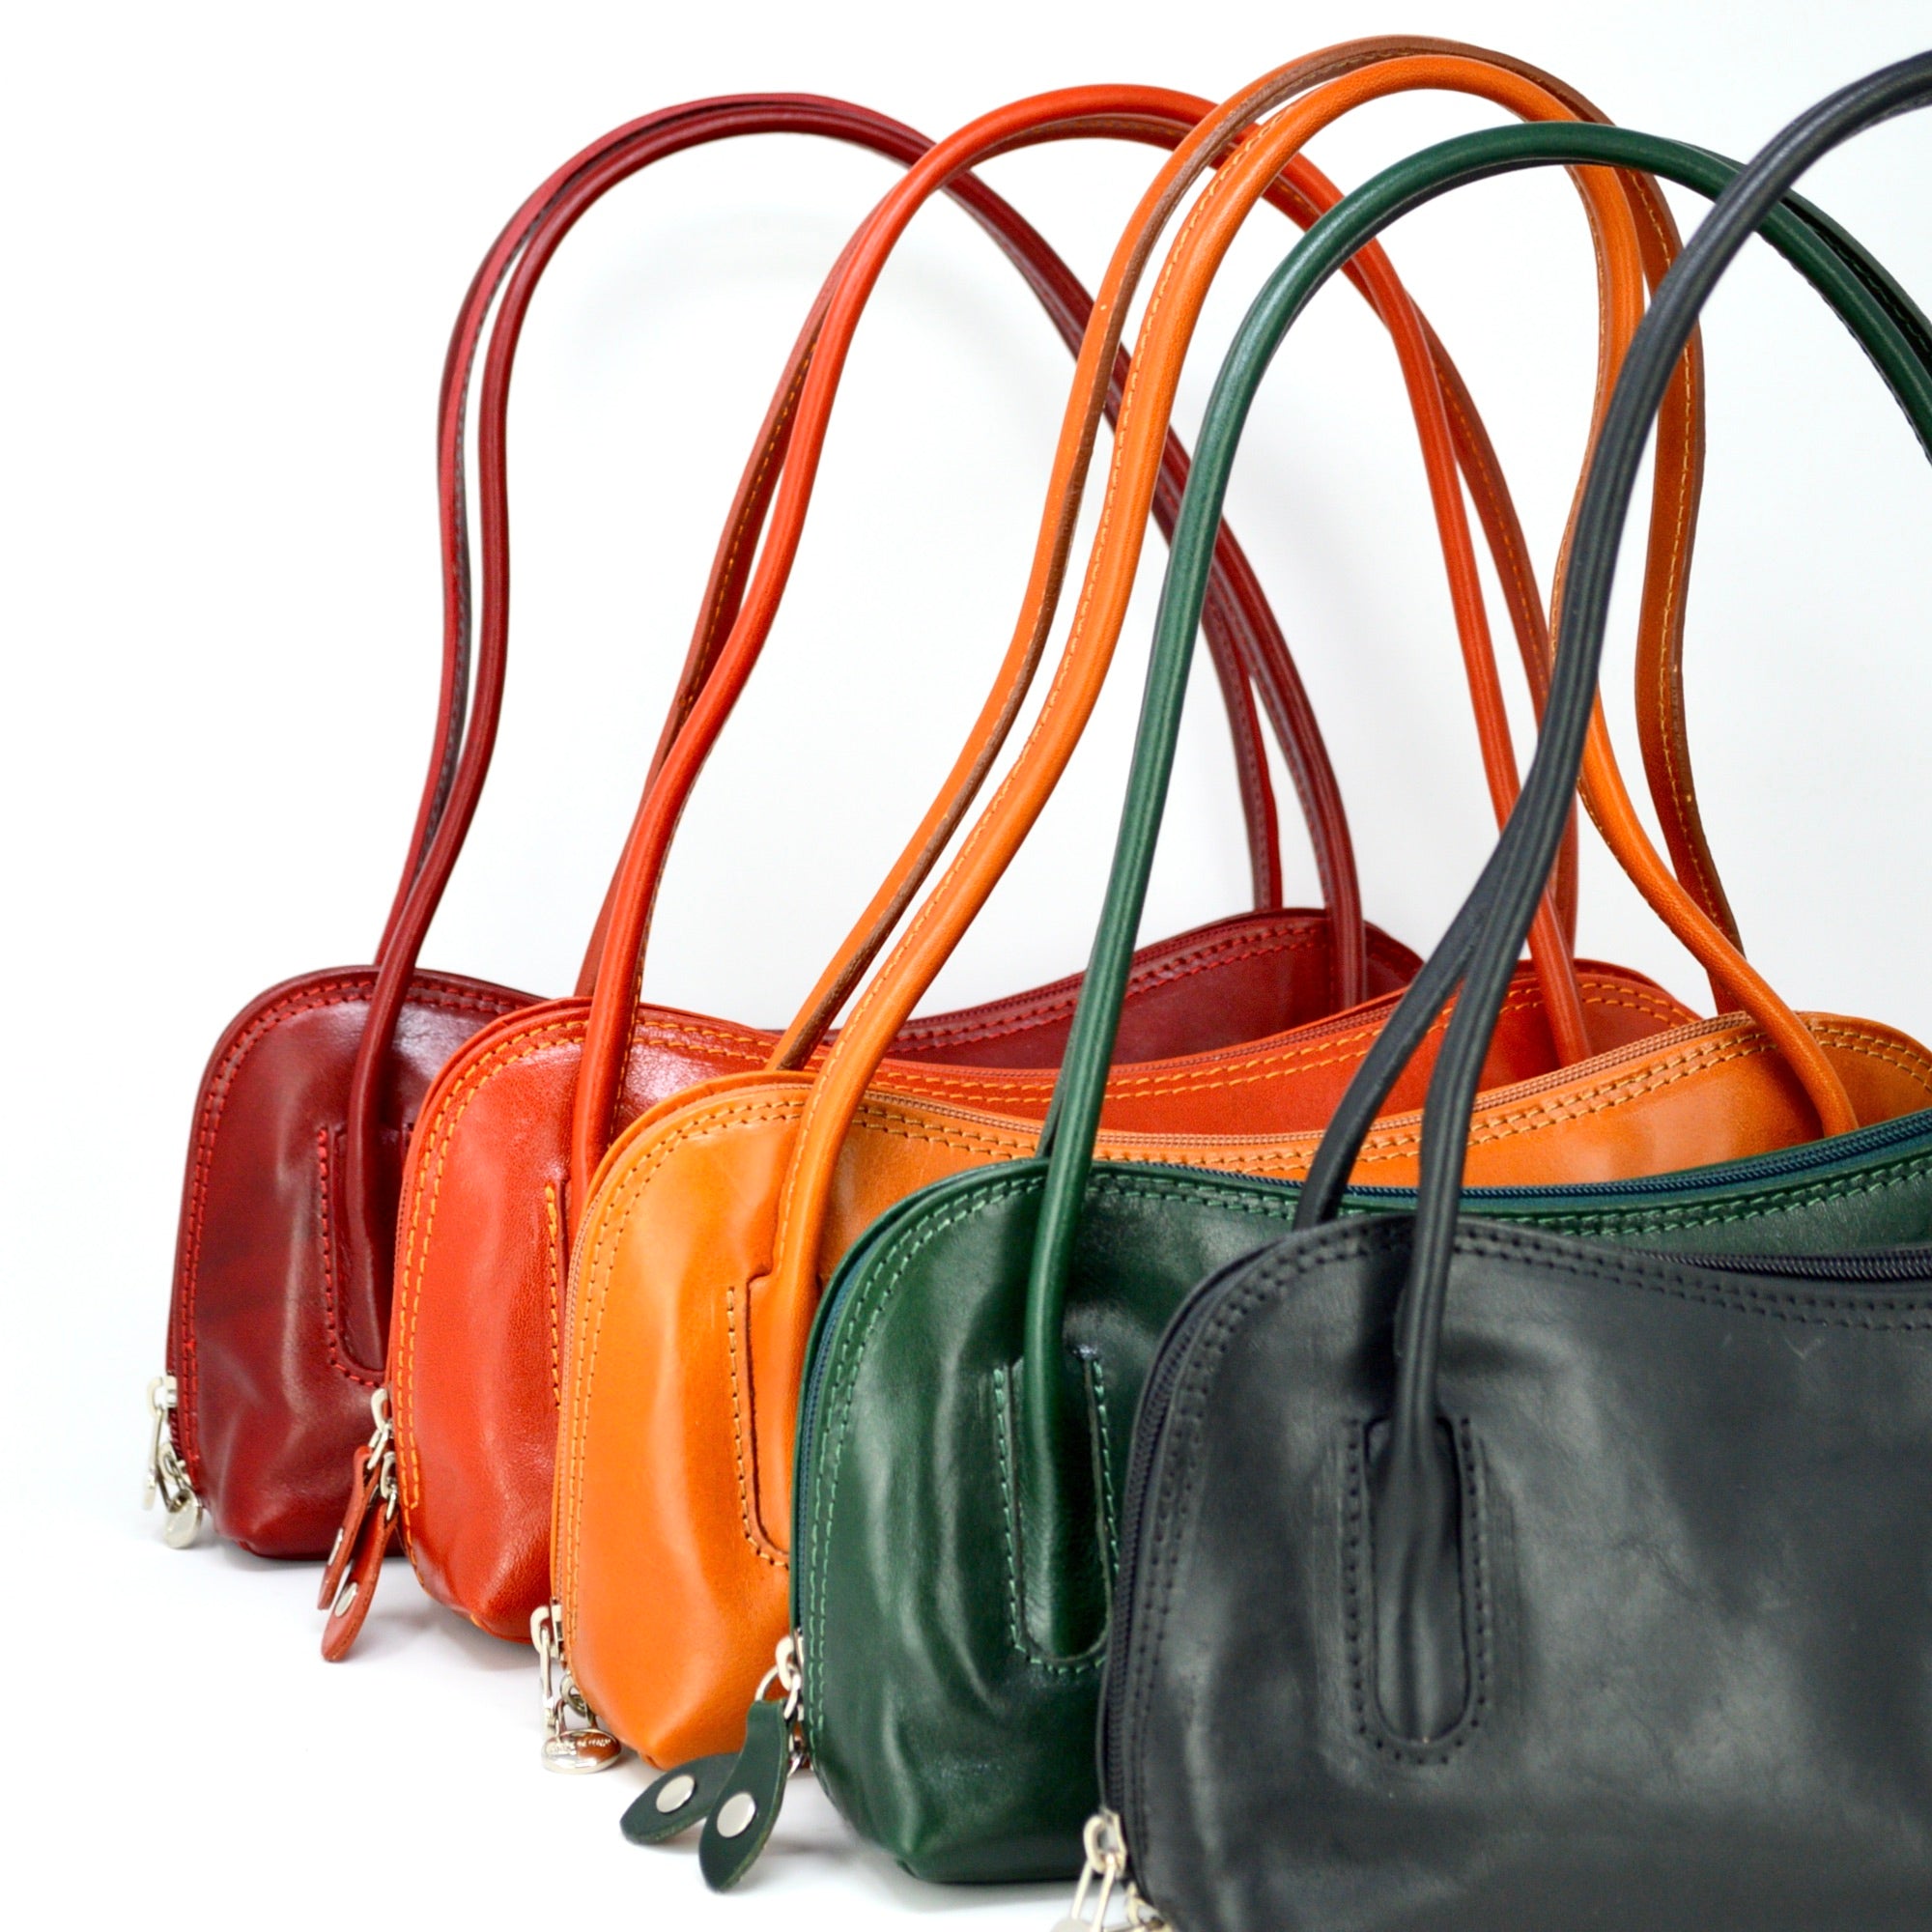 Buy Luxury Italian Genuine Leather Handbags Online